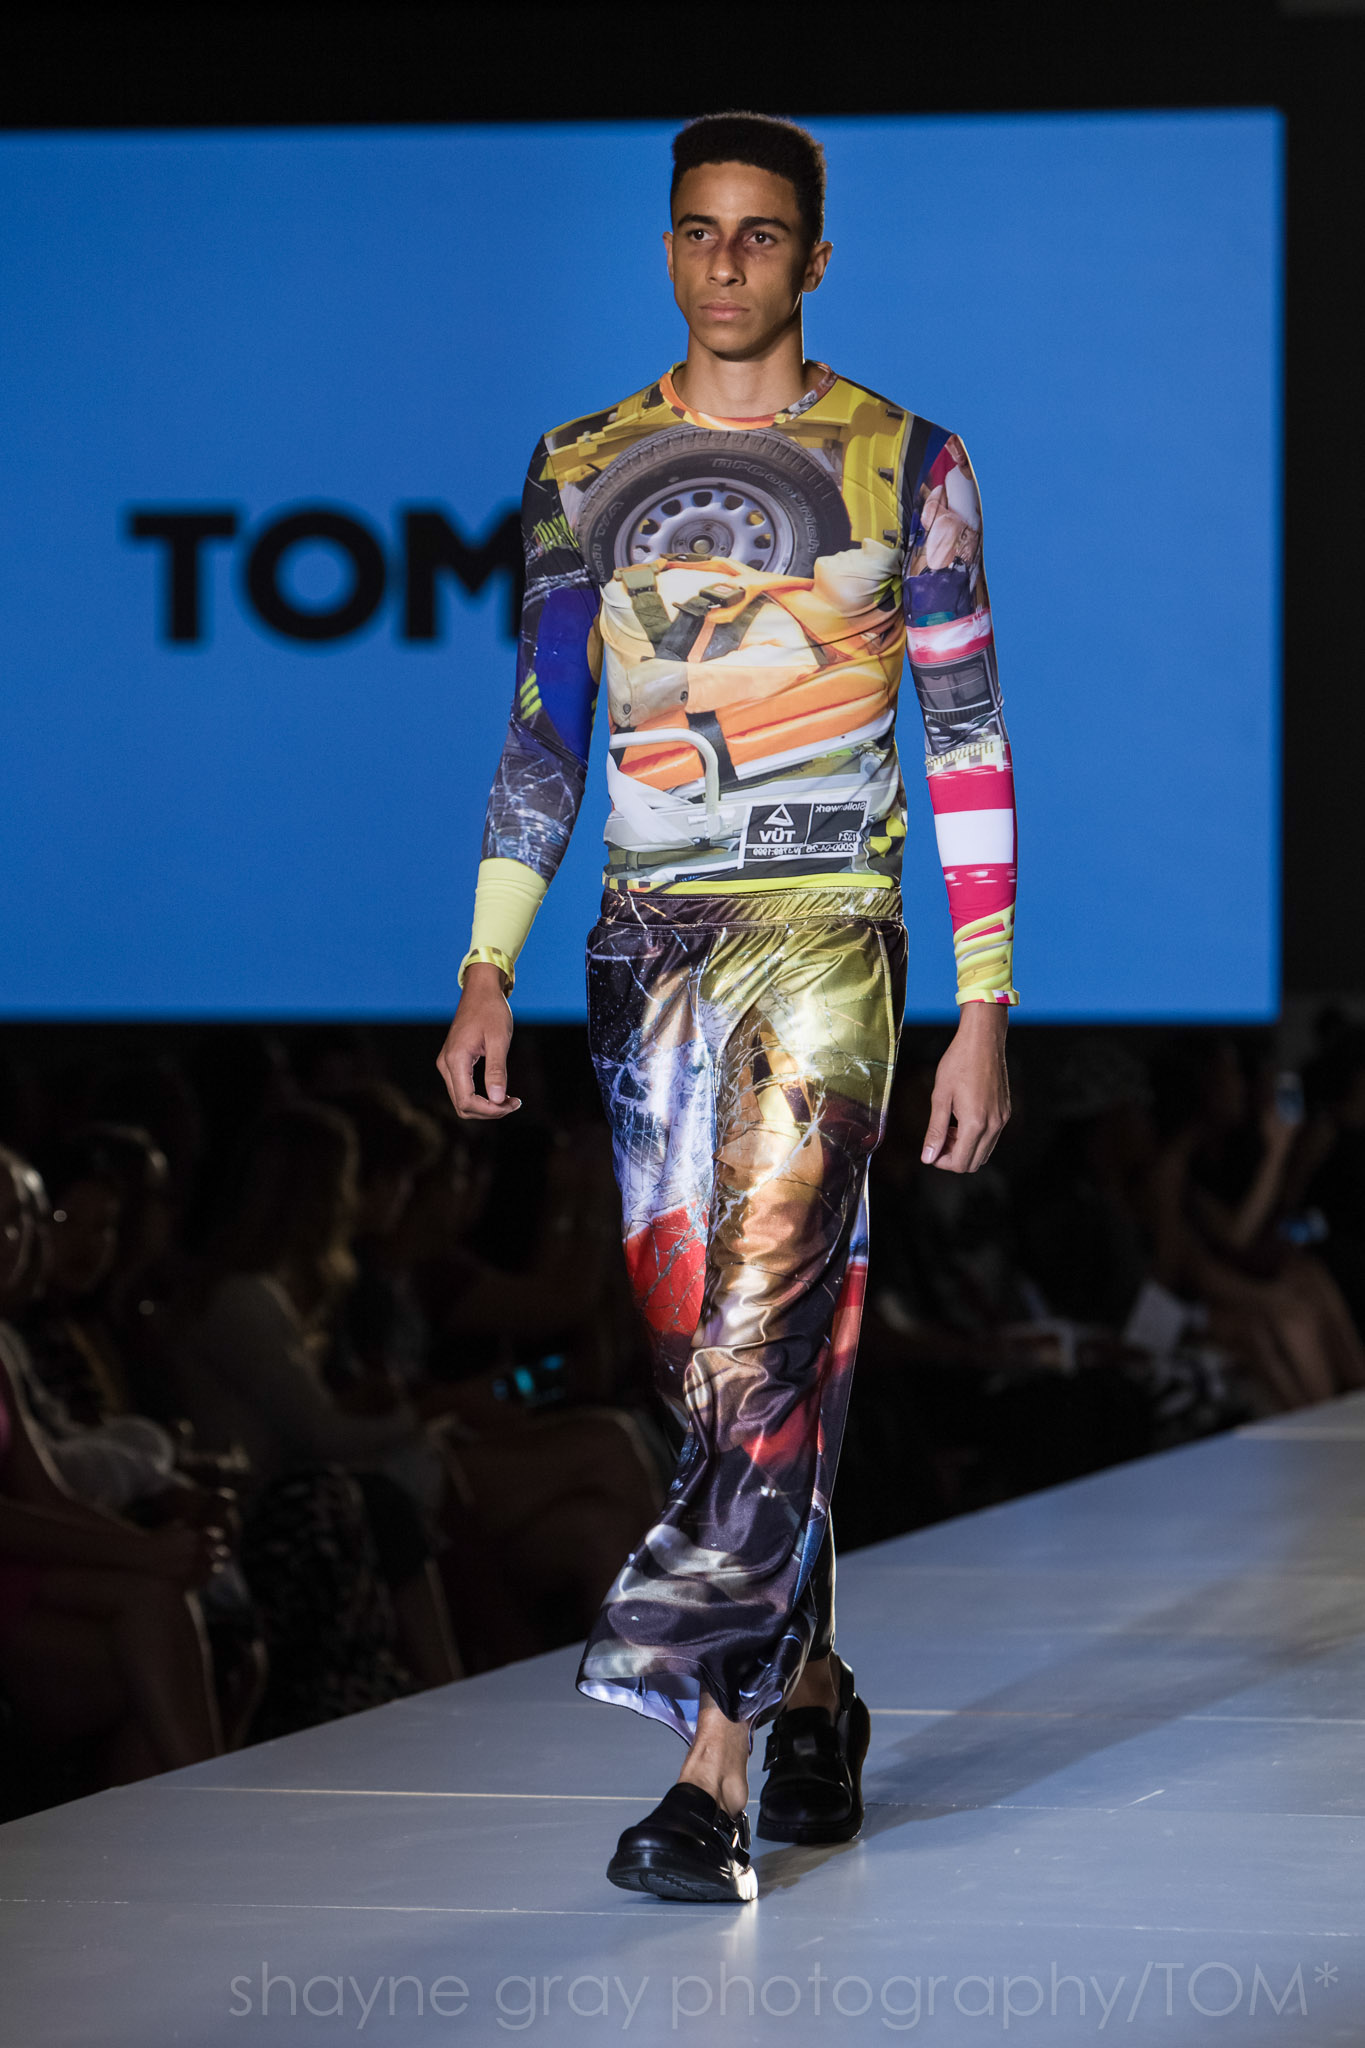 Shayne-Gray-Toronto-men's-fashion_week-TOM-lafaille-7597.jpg